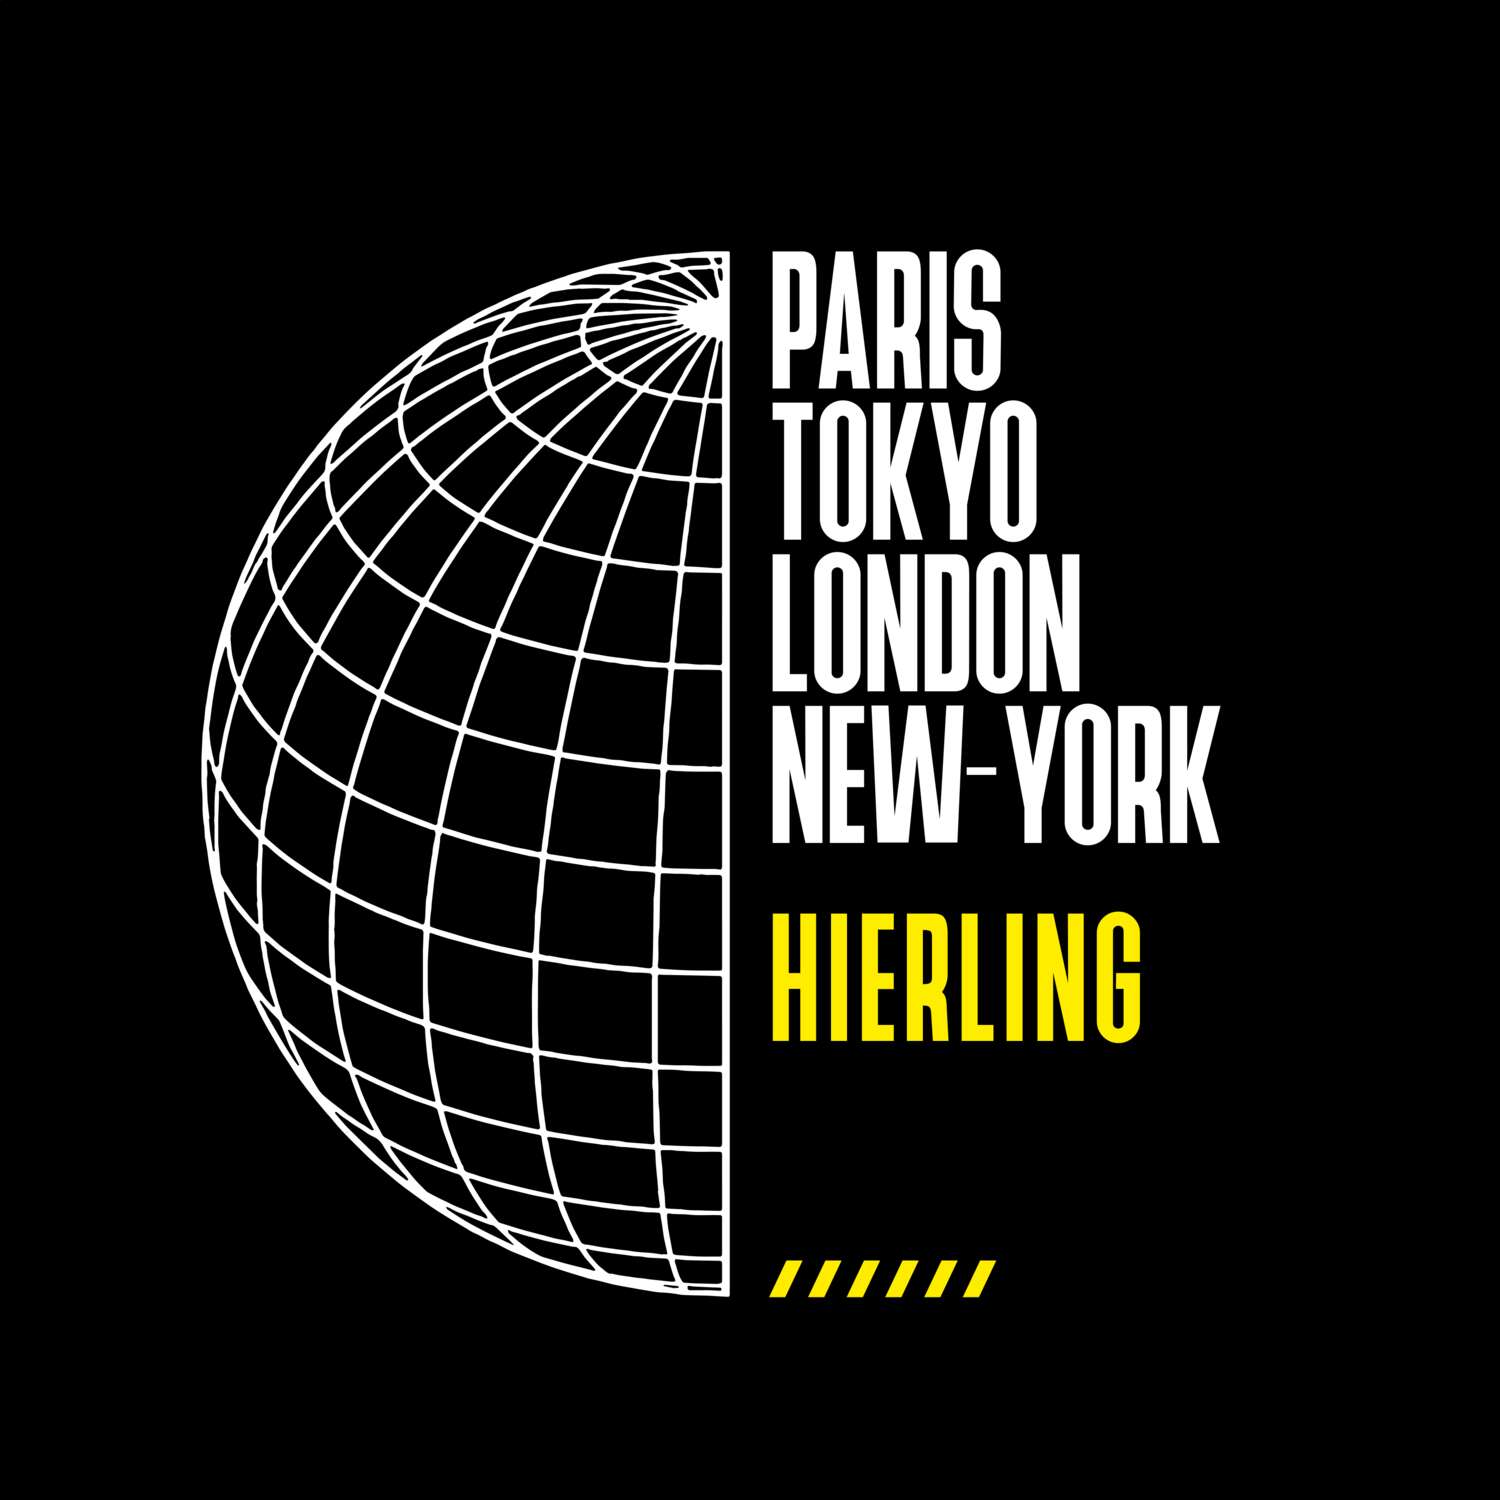 Hierling T-Shirt »Paris Tokyo London«